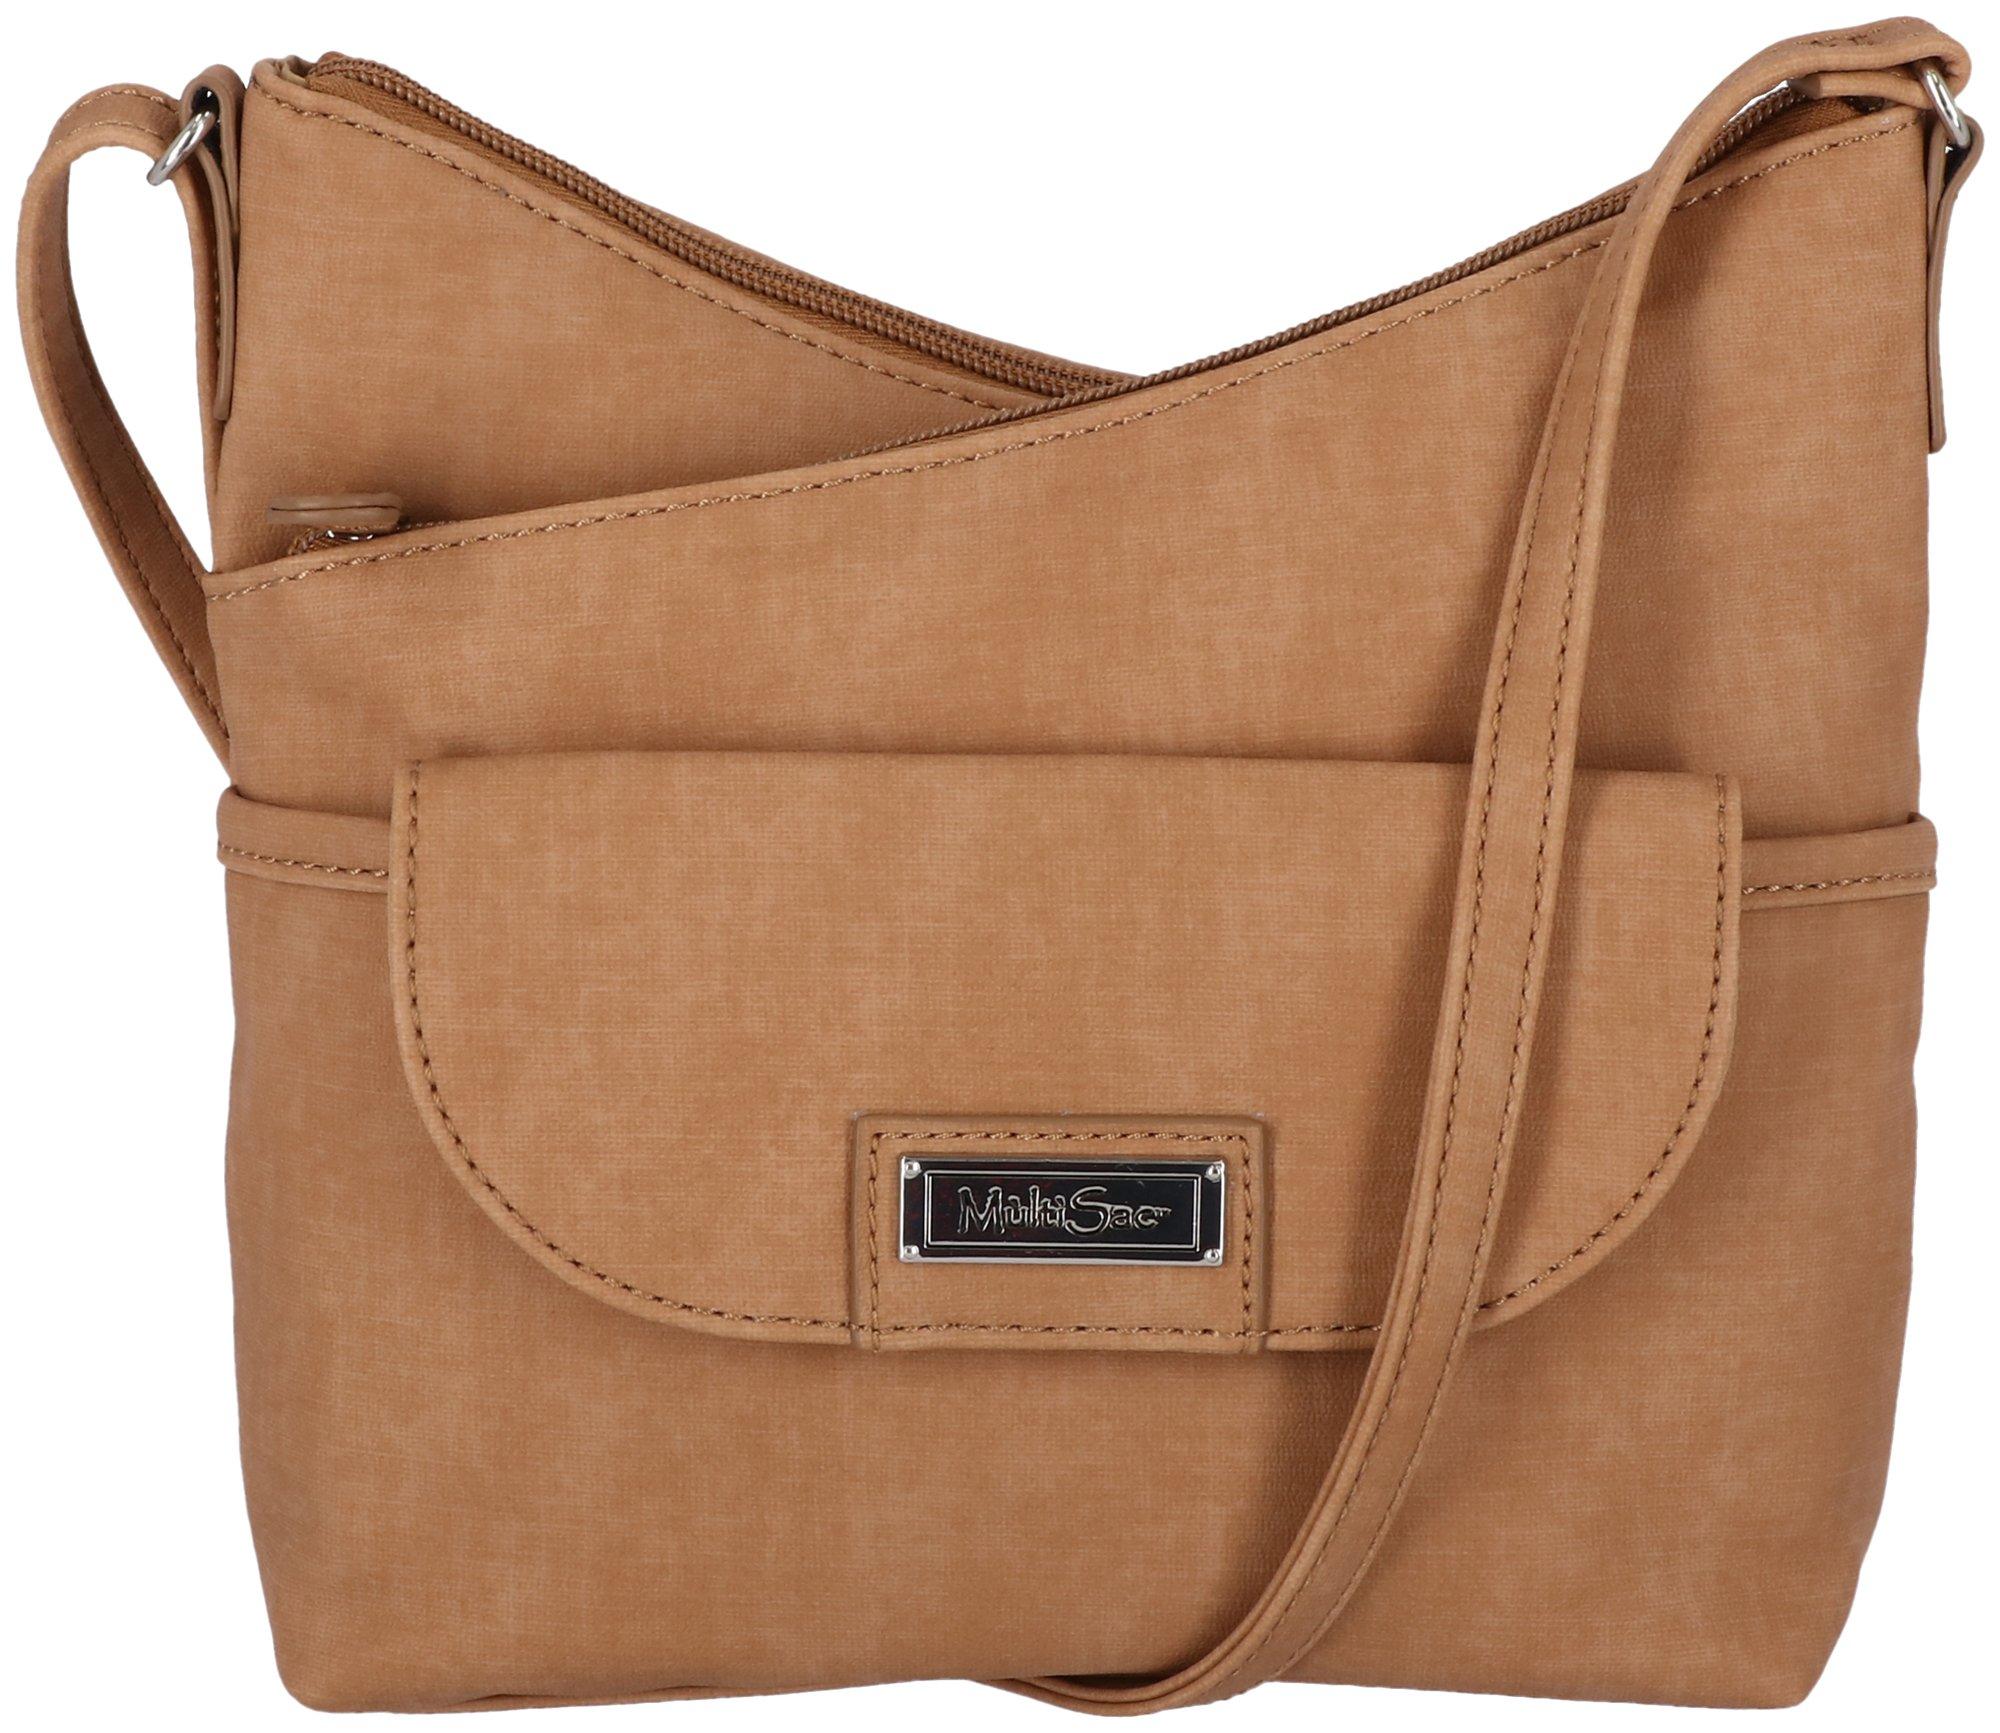 Stone Mountain Leather Shoulder Bag Tan Camel Purse Zippered Handbag